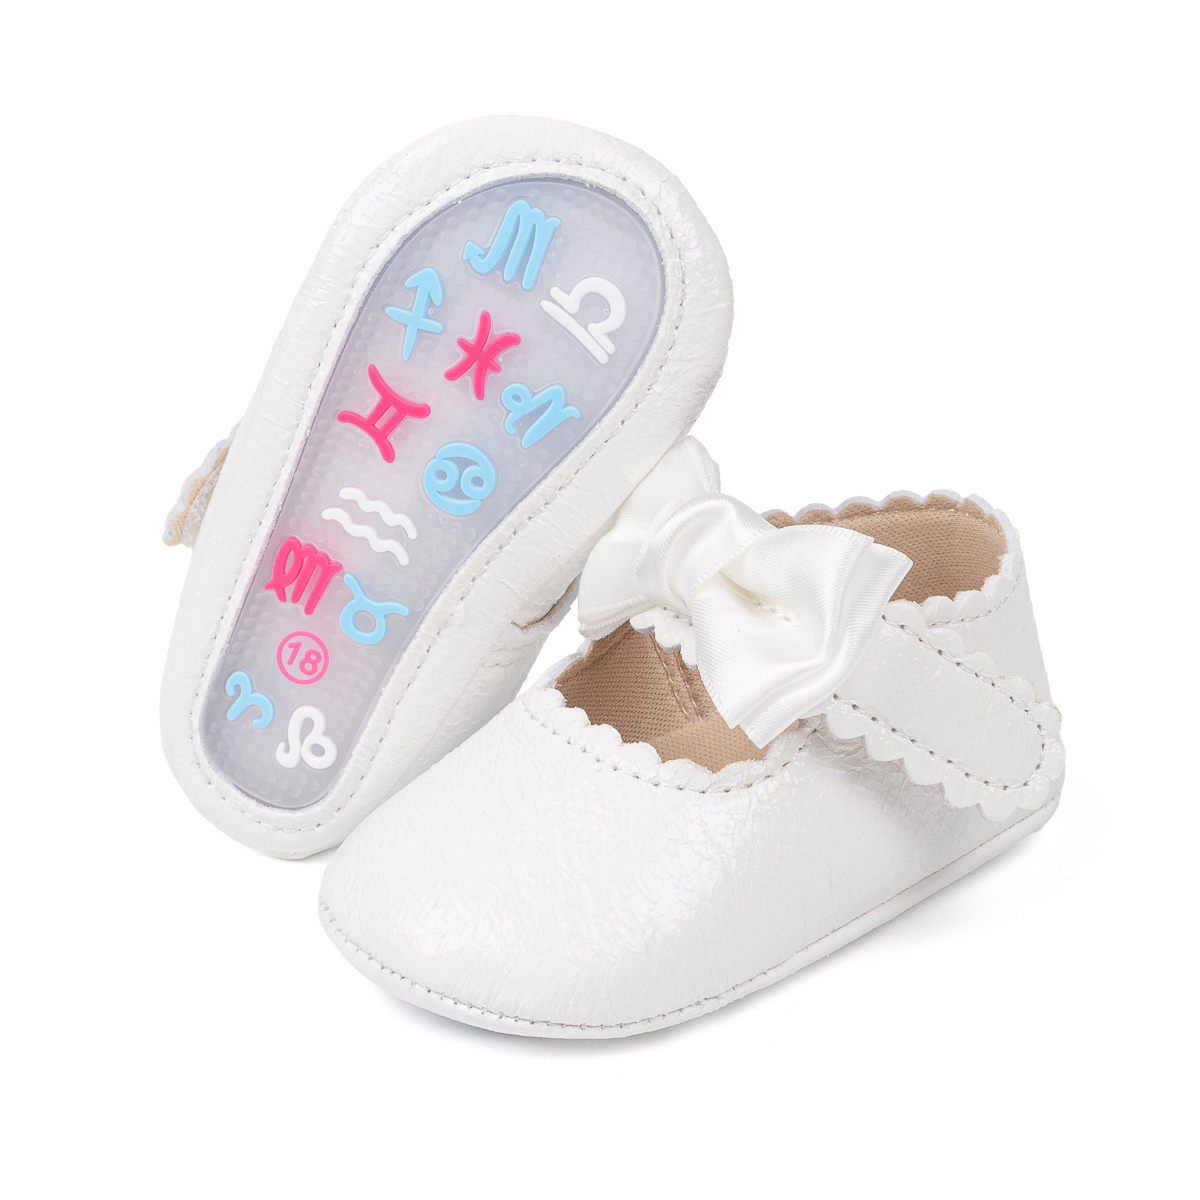 PU Upper PVC Anti-slip sole Baby Dress Shoes